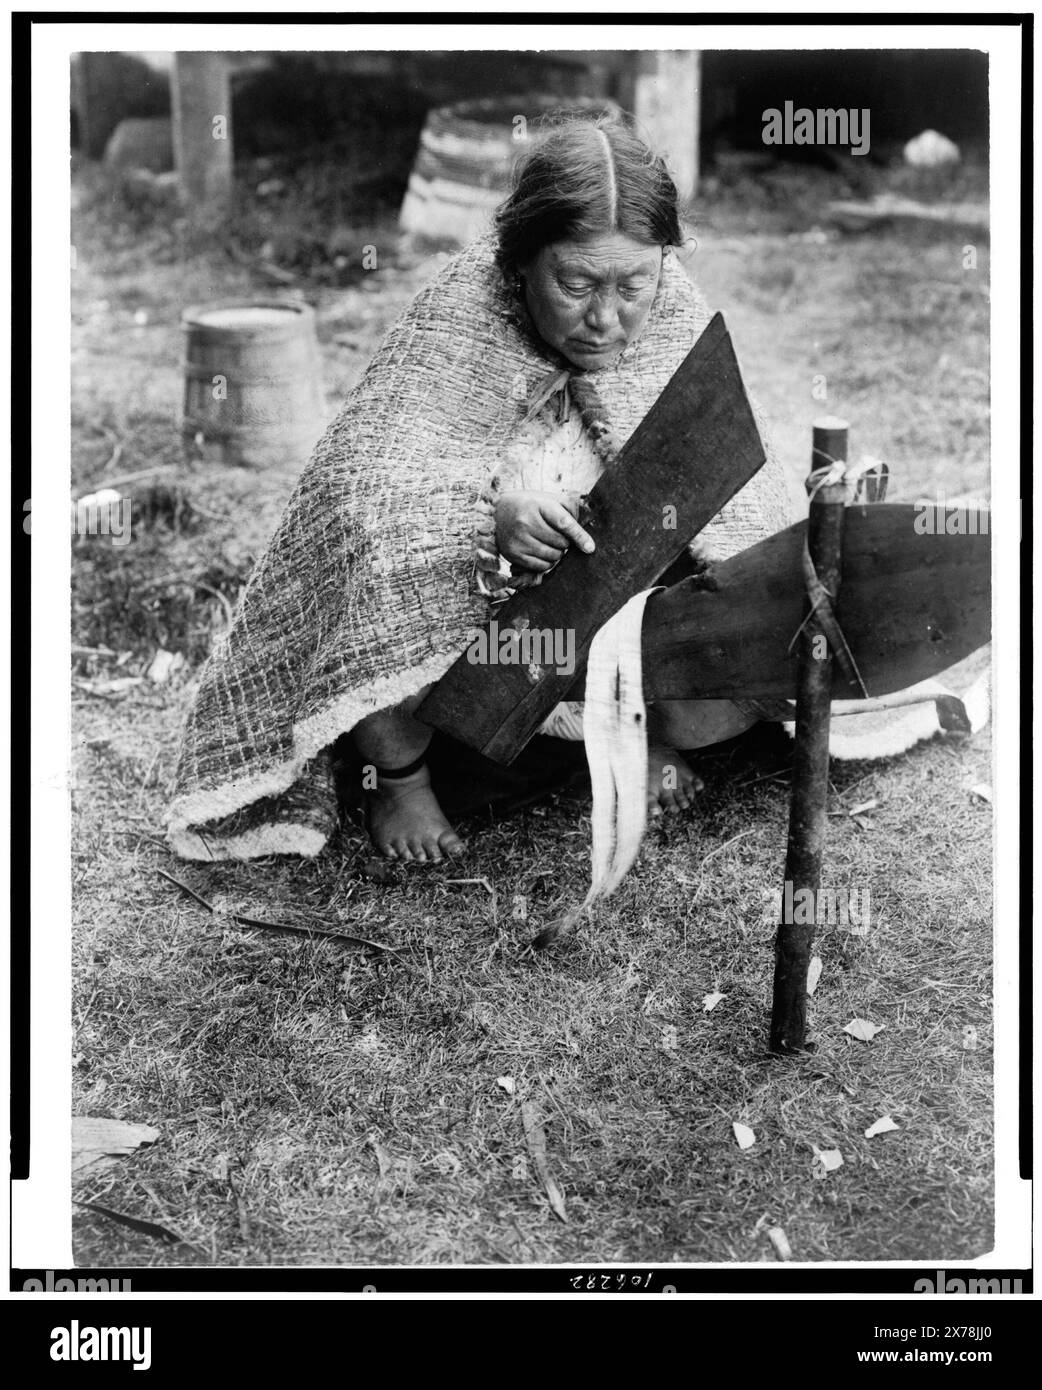 Preparing cedar bark Nakoaktok, Edward S. Curtis Collection., Curtis no. 3570., Published in: The North American Indian / Edward S. Curtis. [Seattle, Wash.] : Edward S. Curtis, 1907-30, v. 10, p. 16.. Indians of North America, Arts & crafts, 1910-1920. , Indians of North America, Domestic life, 1910-1920. , Kwakiutl Indians, Domestic life, 1910-1920. , Kwakiutl Indians, Arts & crafts, 1910-1920. , Indians of North America, Clothing & dress, 1910-1920. , Kwakiutl Indians, Clothing & dress, 1910-1920. Stock Photo